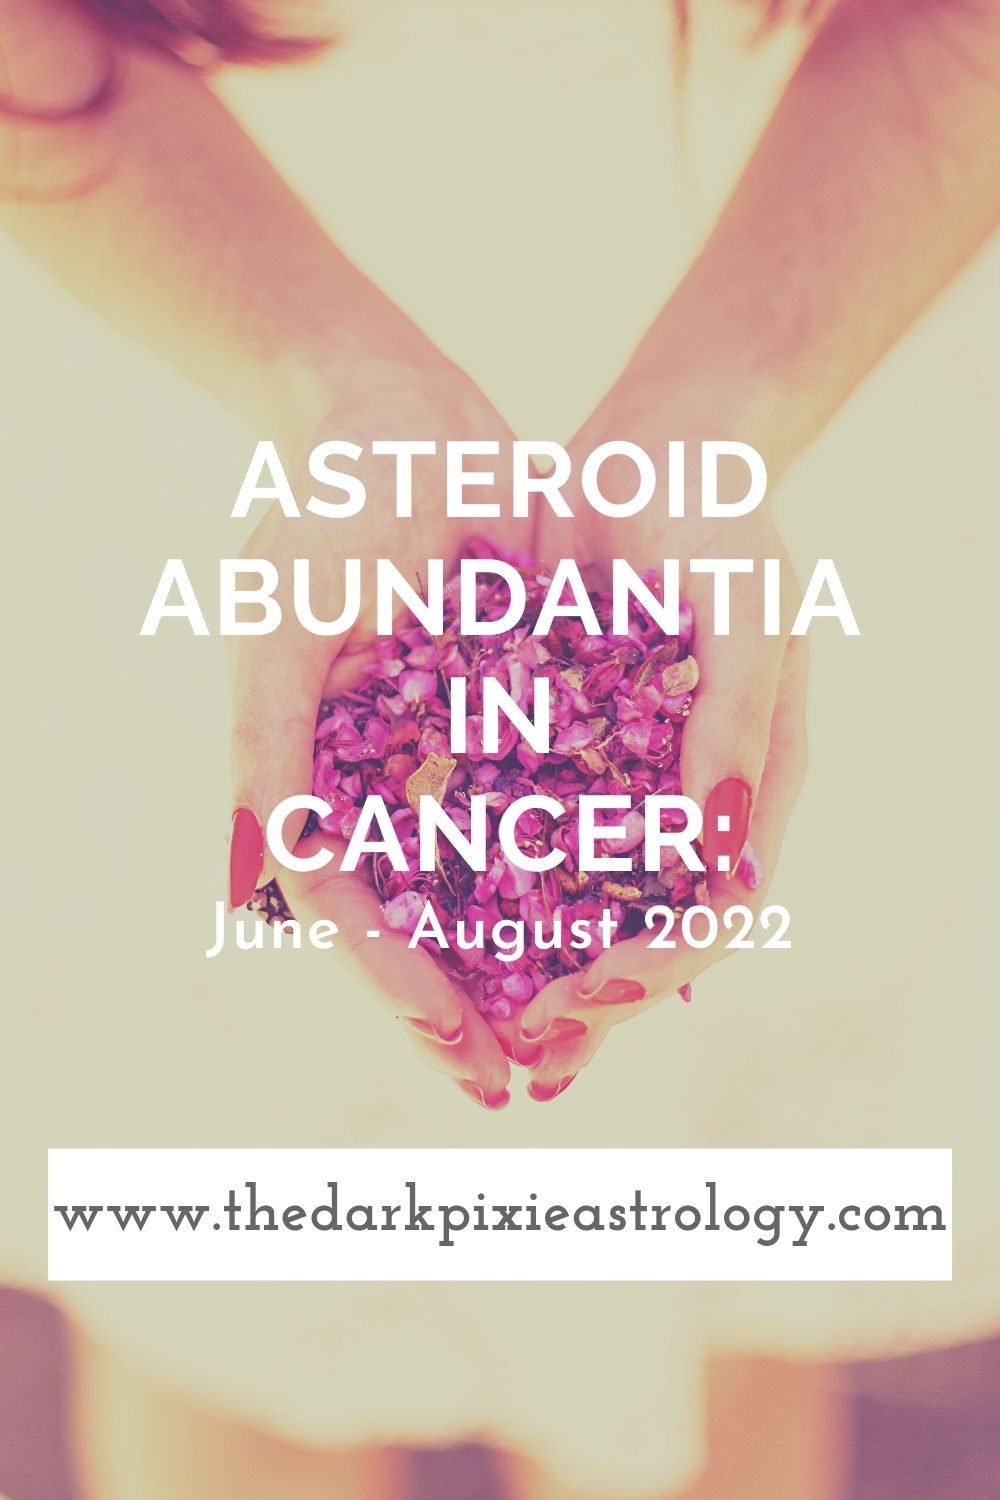 Asteroid Abundantia in Cancer: June - August 2022 - The Dark Pixie Astrology